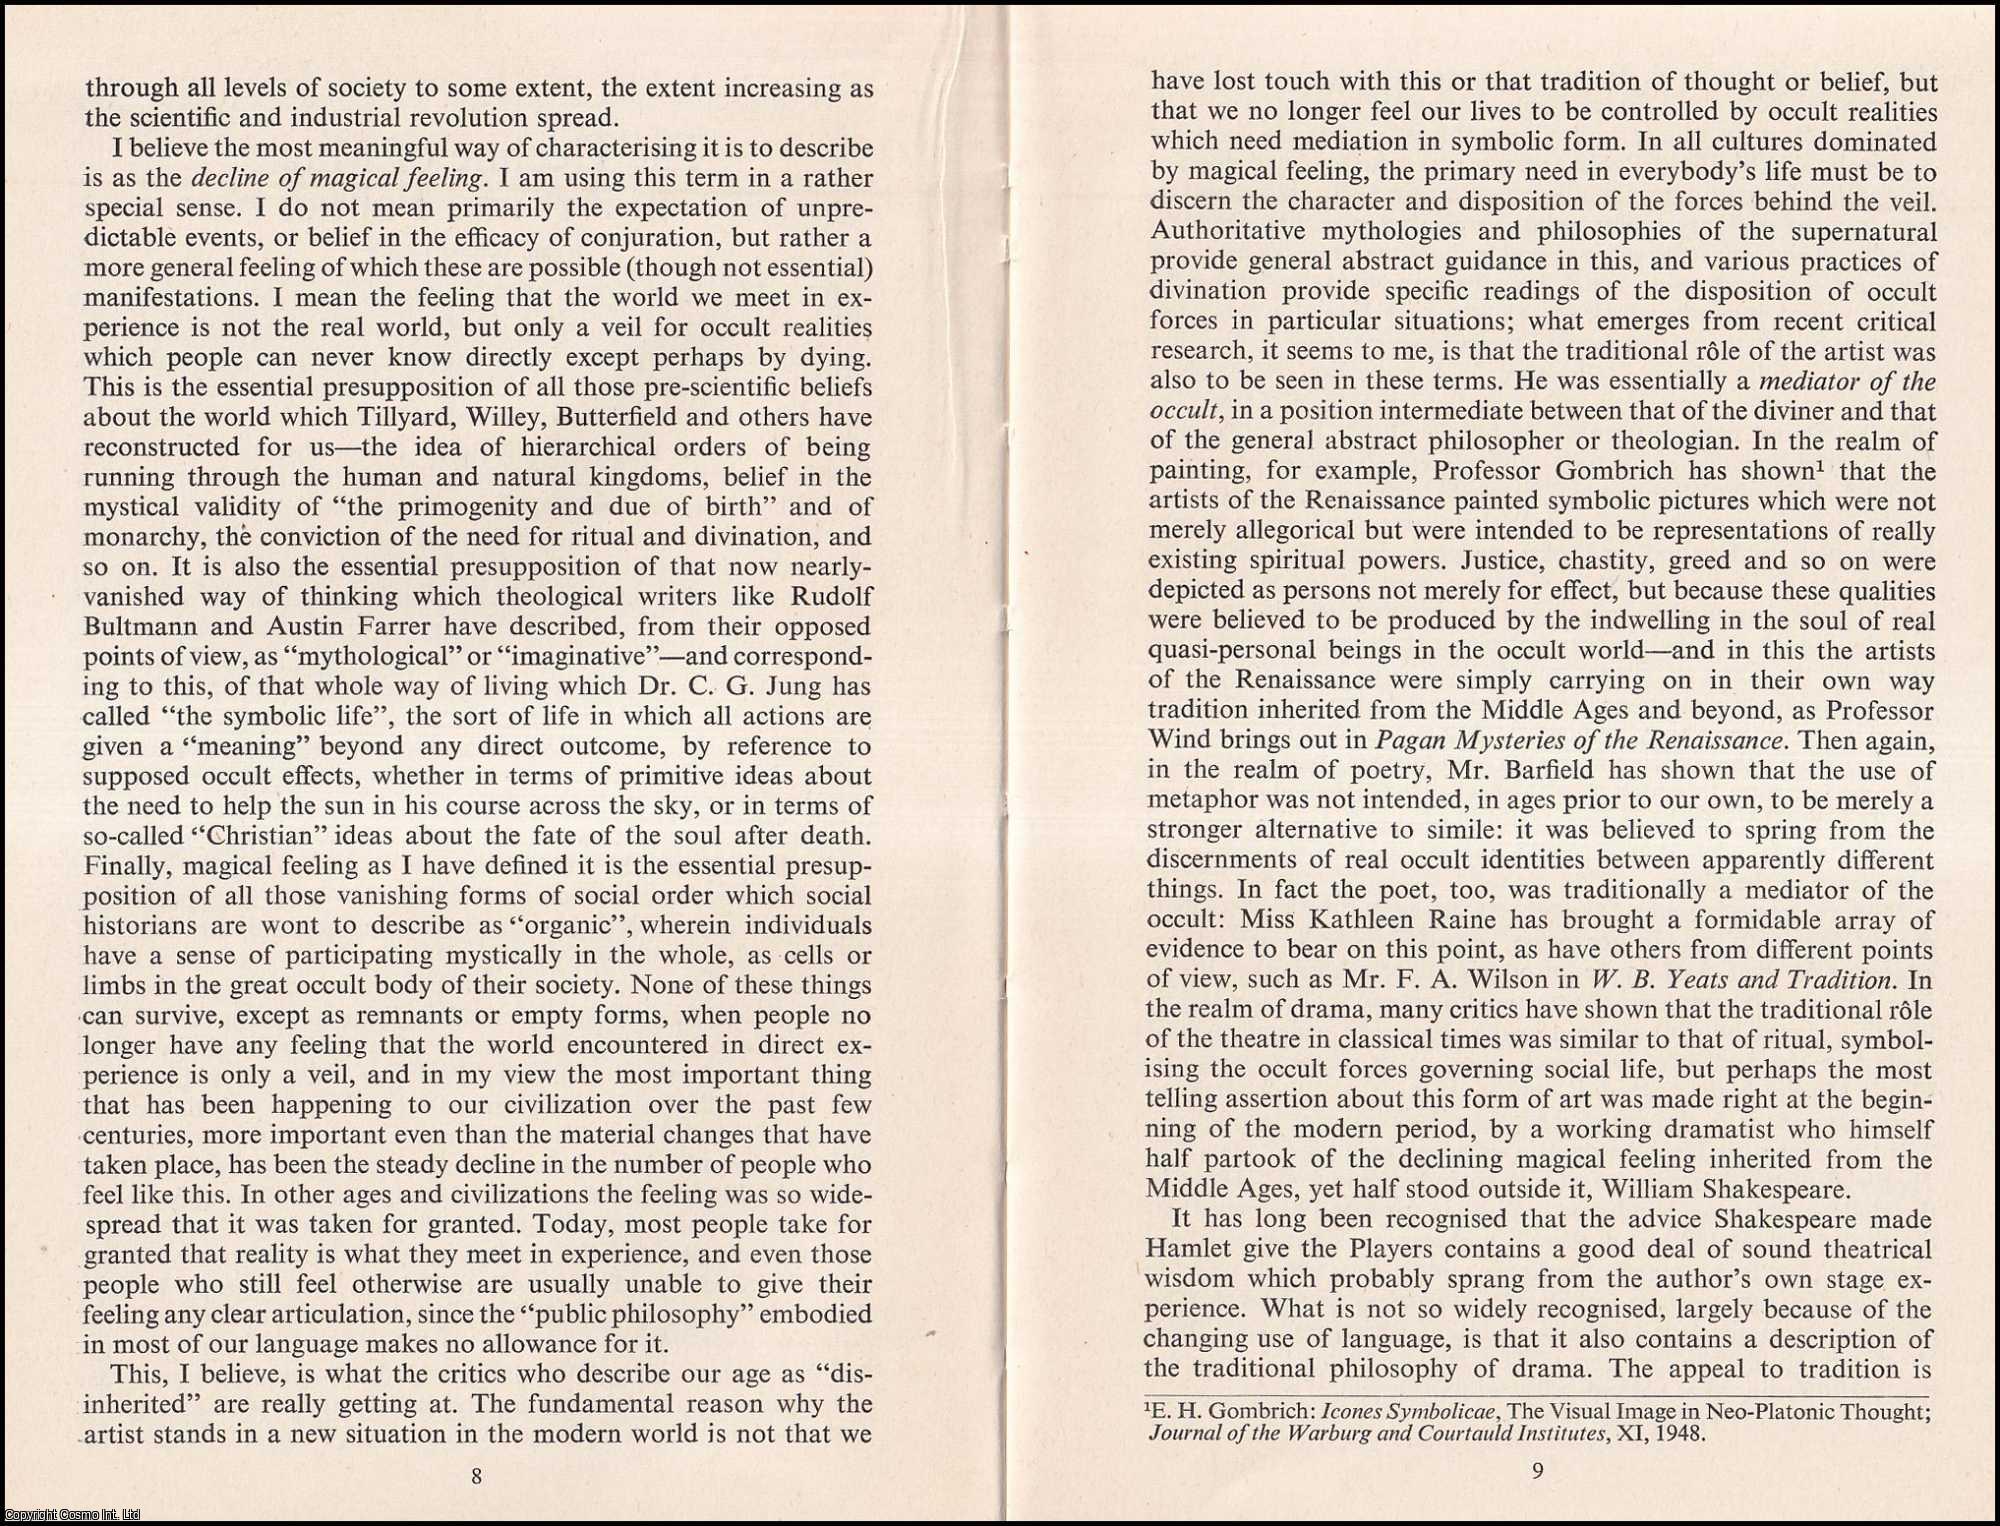 John Wren Lewis - The Decline of Magic in Art and Politics. An original article from Critical Quarterly, 1960.